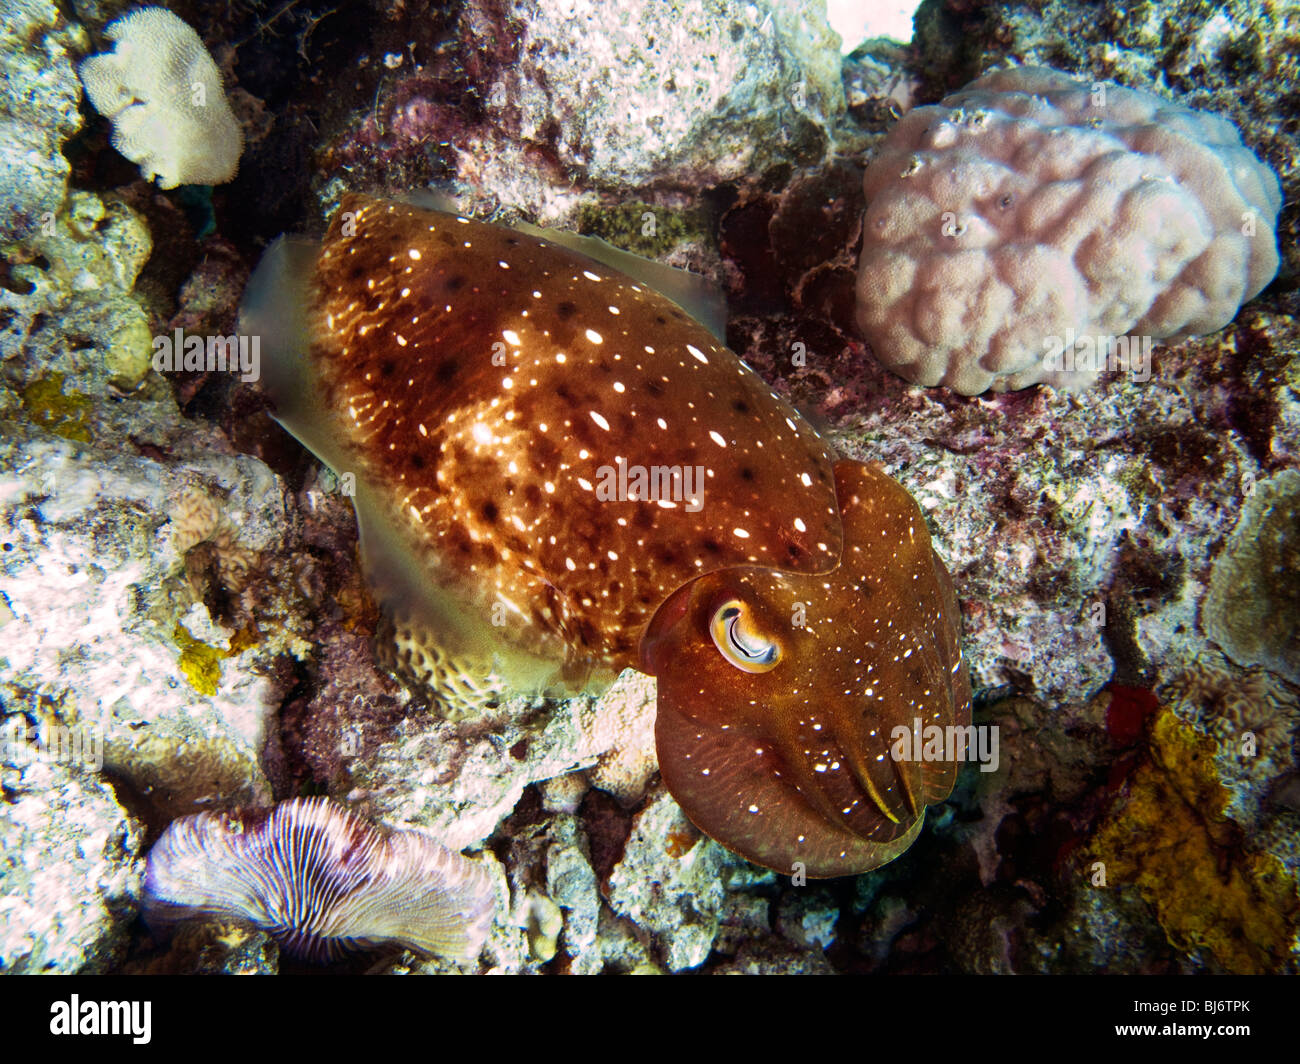 Indonesia, Sulawesi, Wakatobi National Park, underwater, Reef cuttlefish, Sepia latimanus (sepiidae) Stock Photo